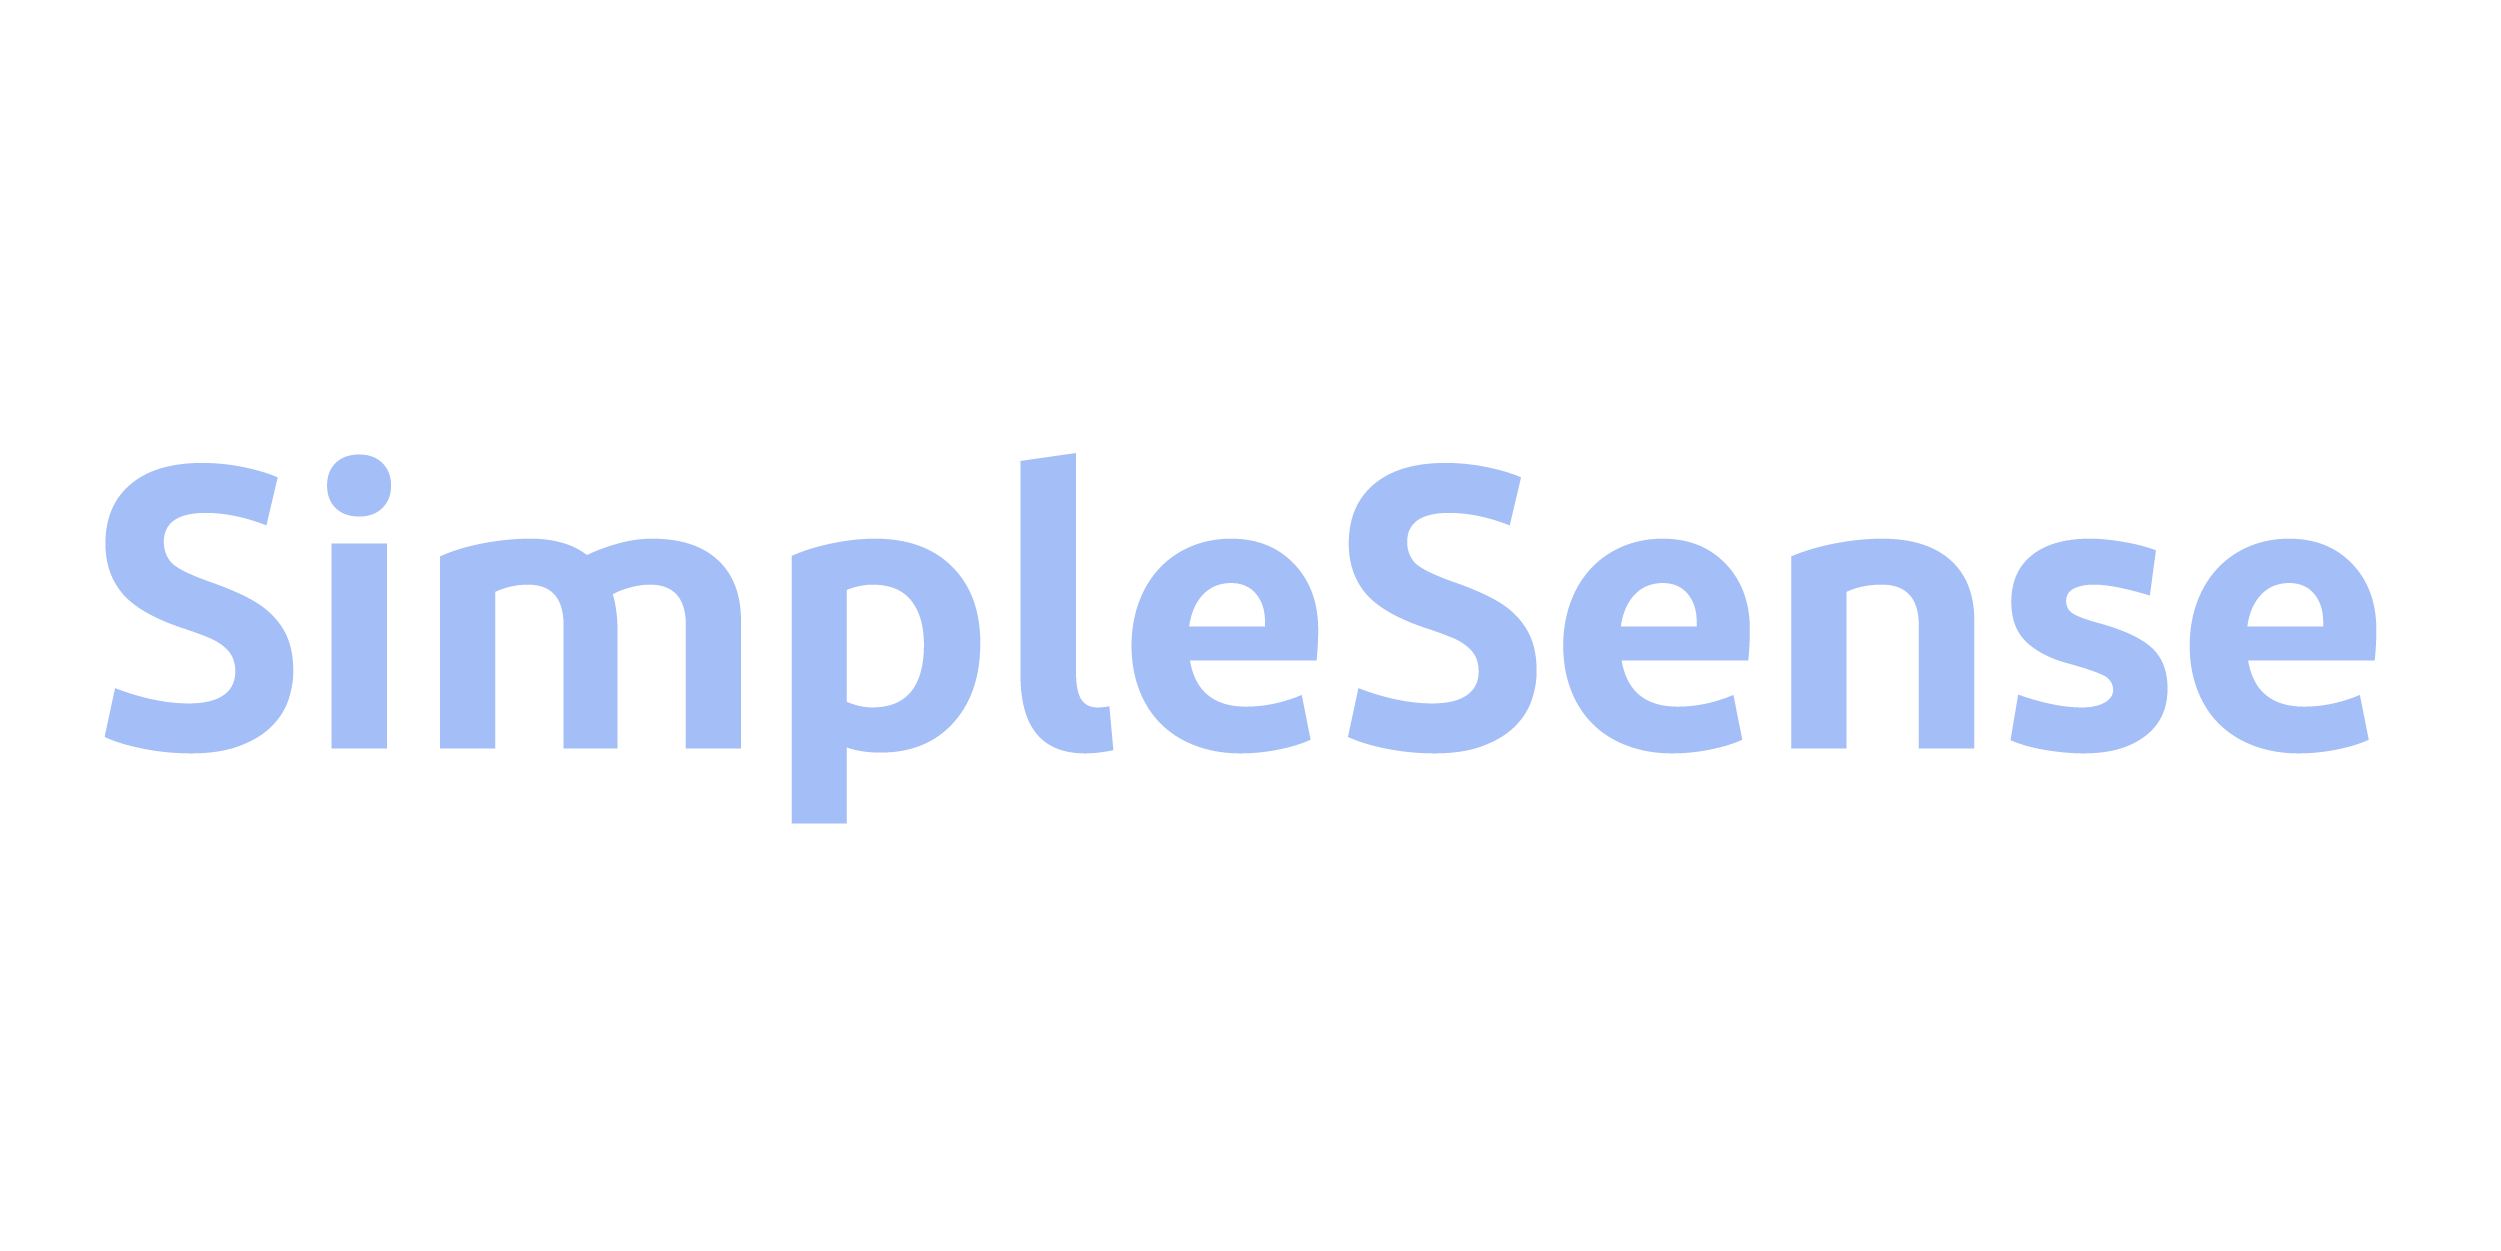 OpenComp-CustomerLogos-Ube_SimpleSense